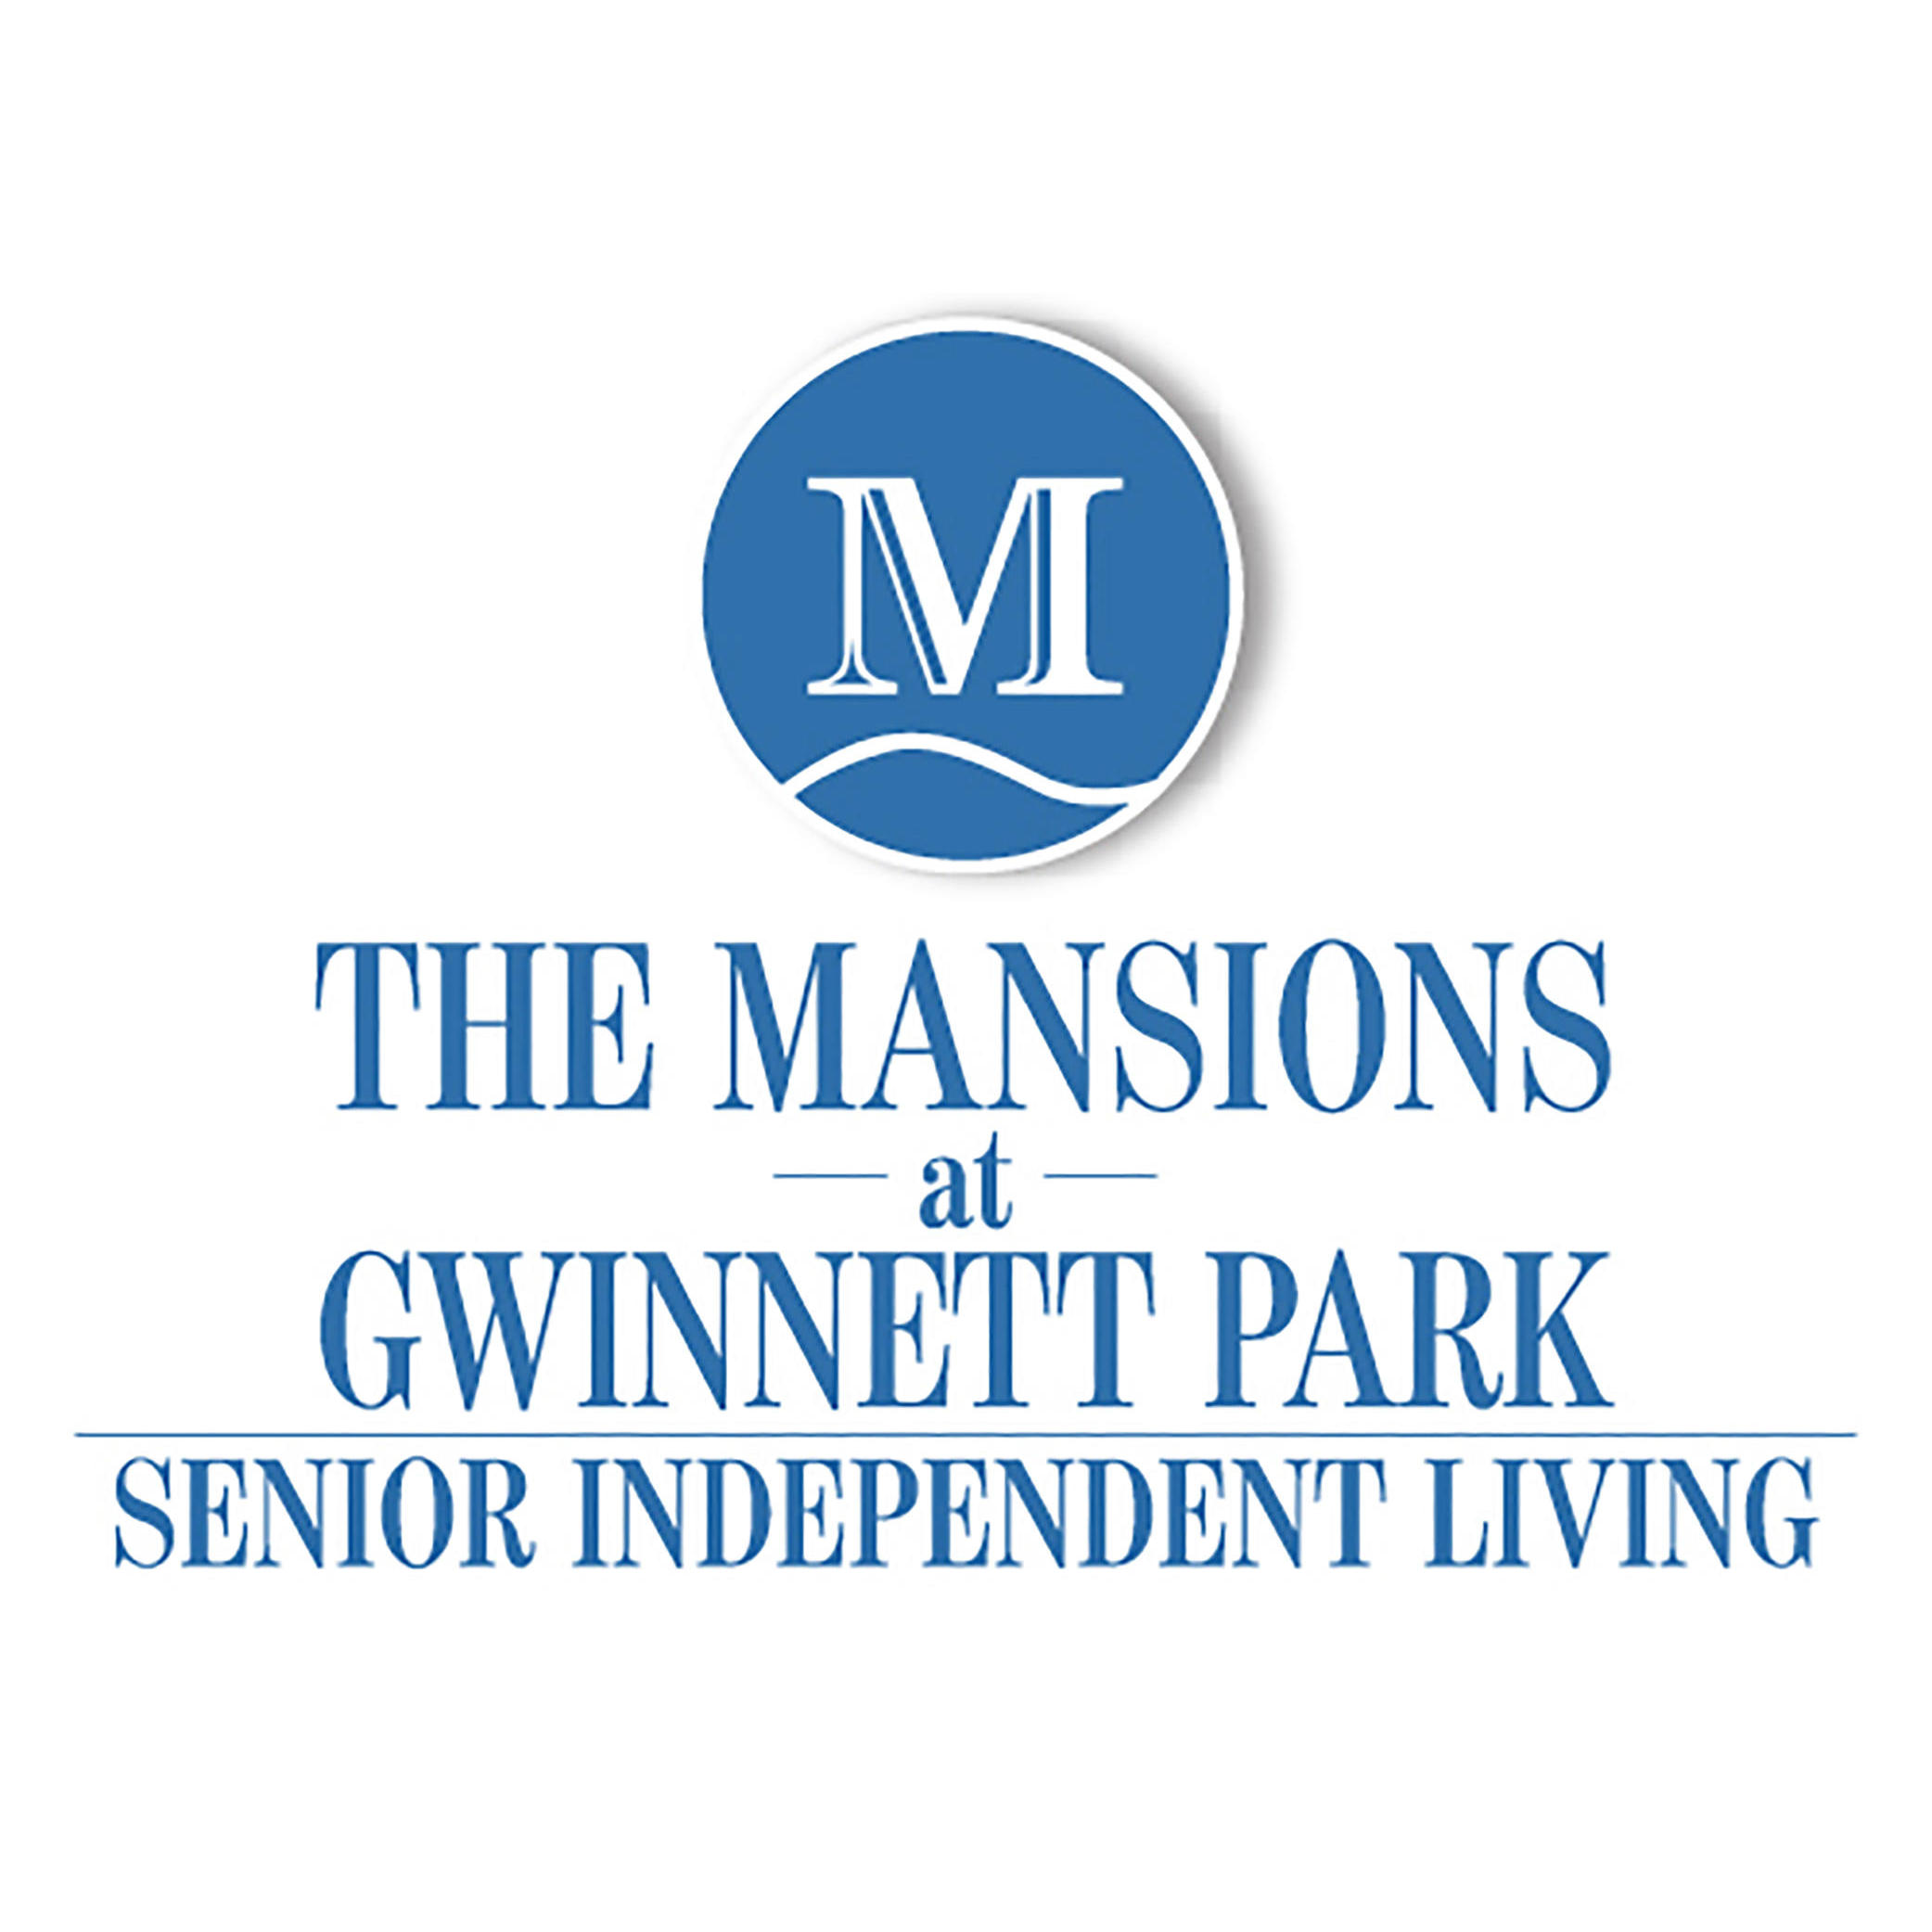 The Mansion at Gwinnett Park - Senior Independent Living Logo